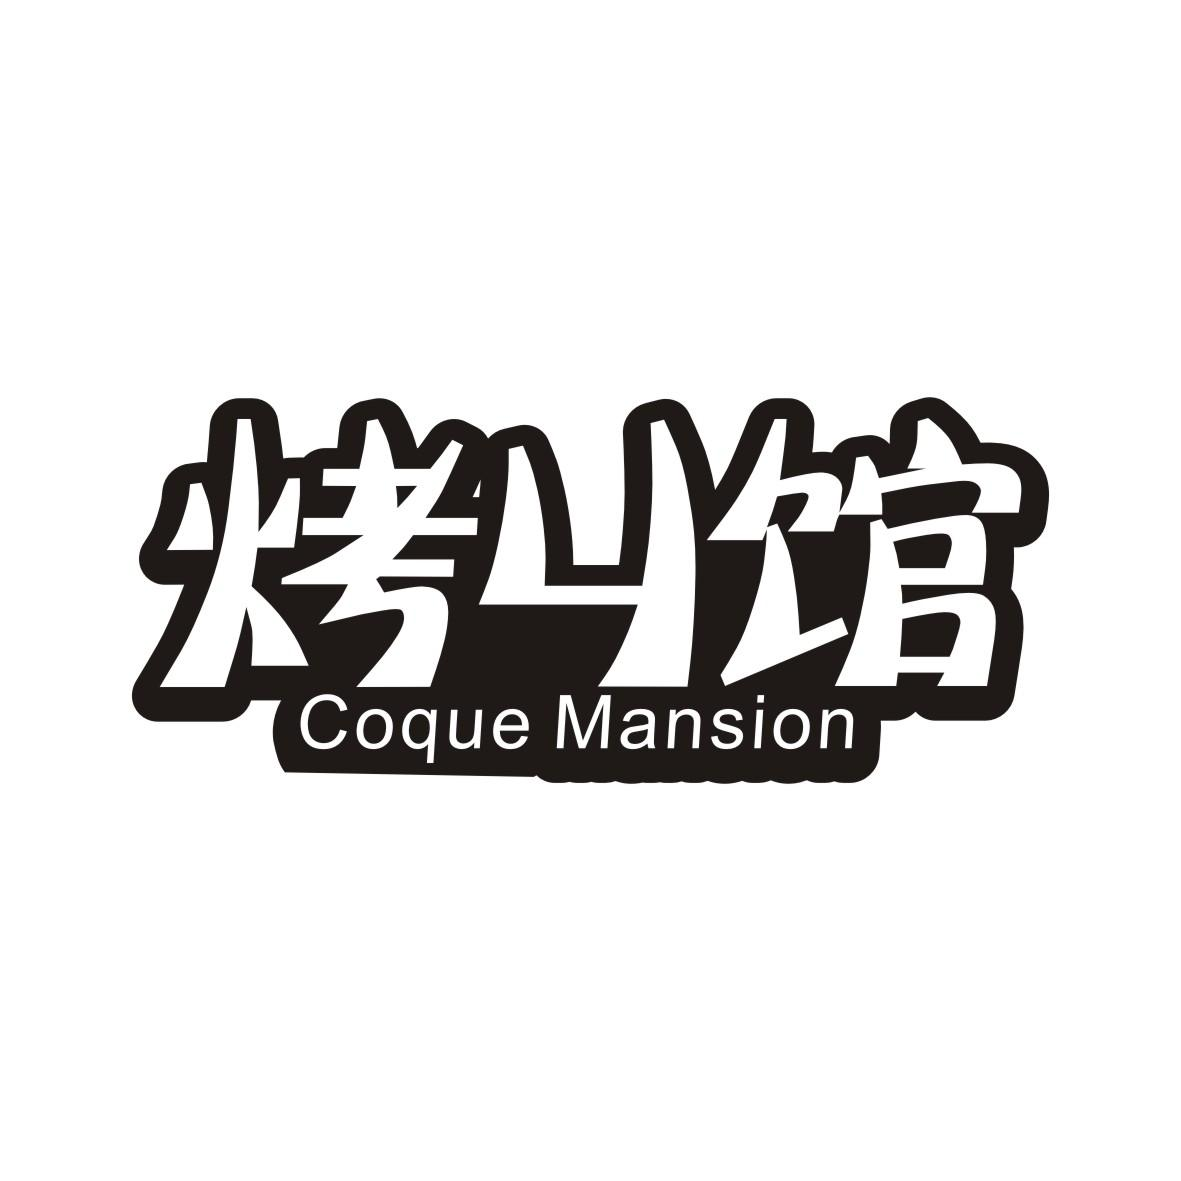 35类-广告销售烤丩馆 COQUE MANSION商标转让